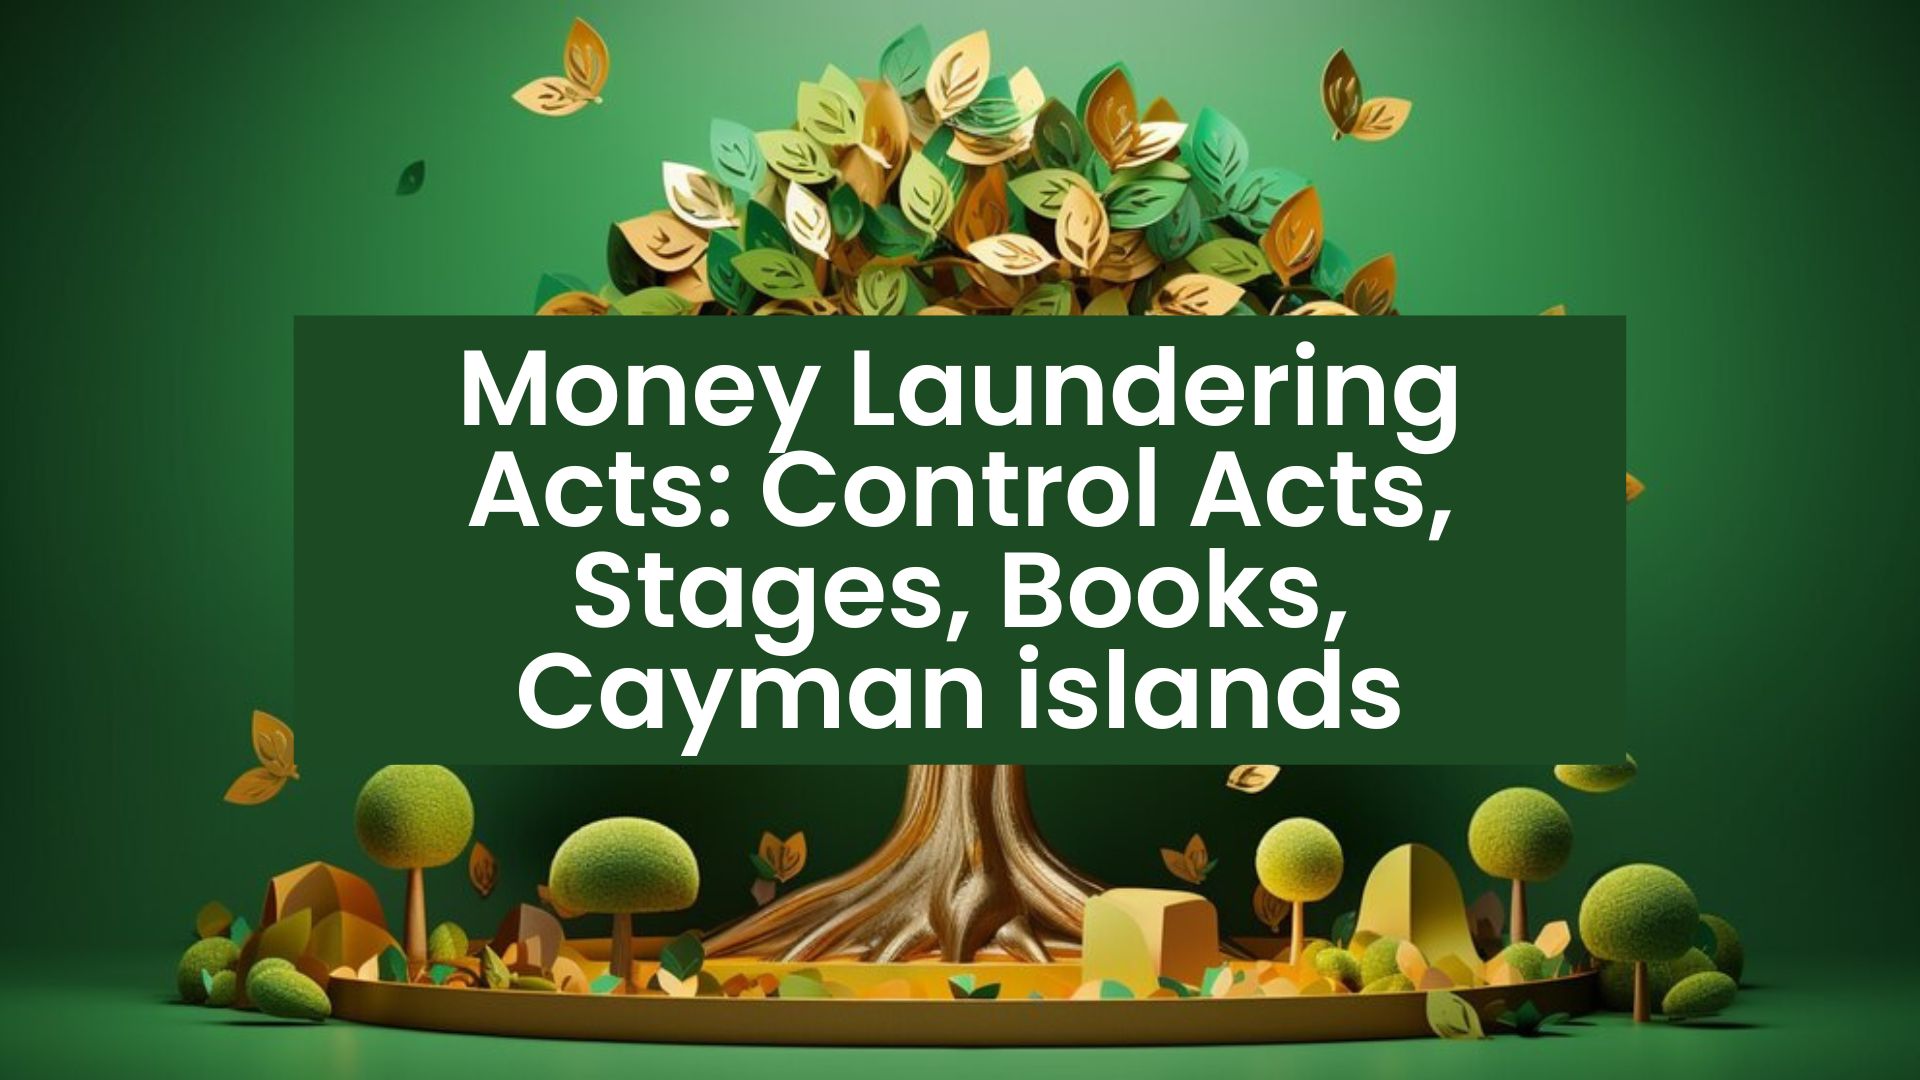 money laundering acts, money laundering control act, money laundering 3 stages, money laundering books, money laundering cayman islands